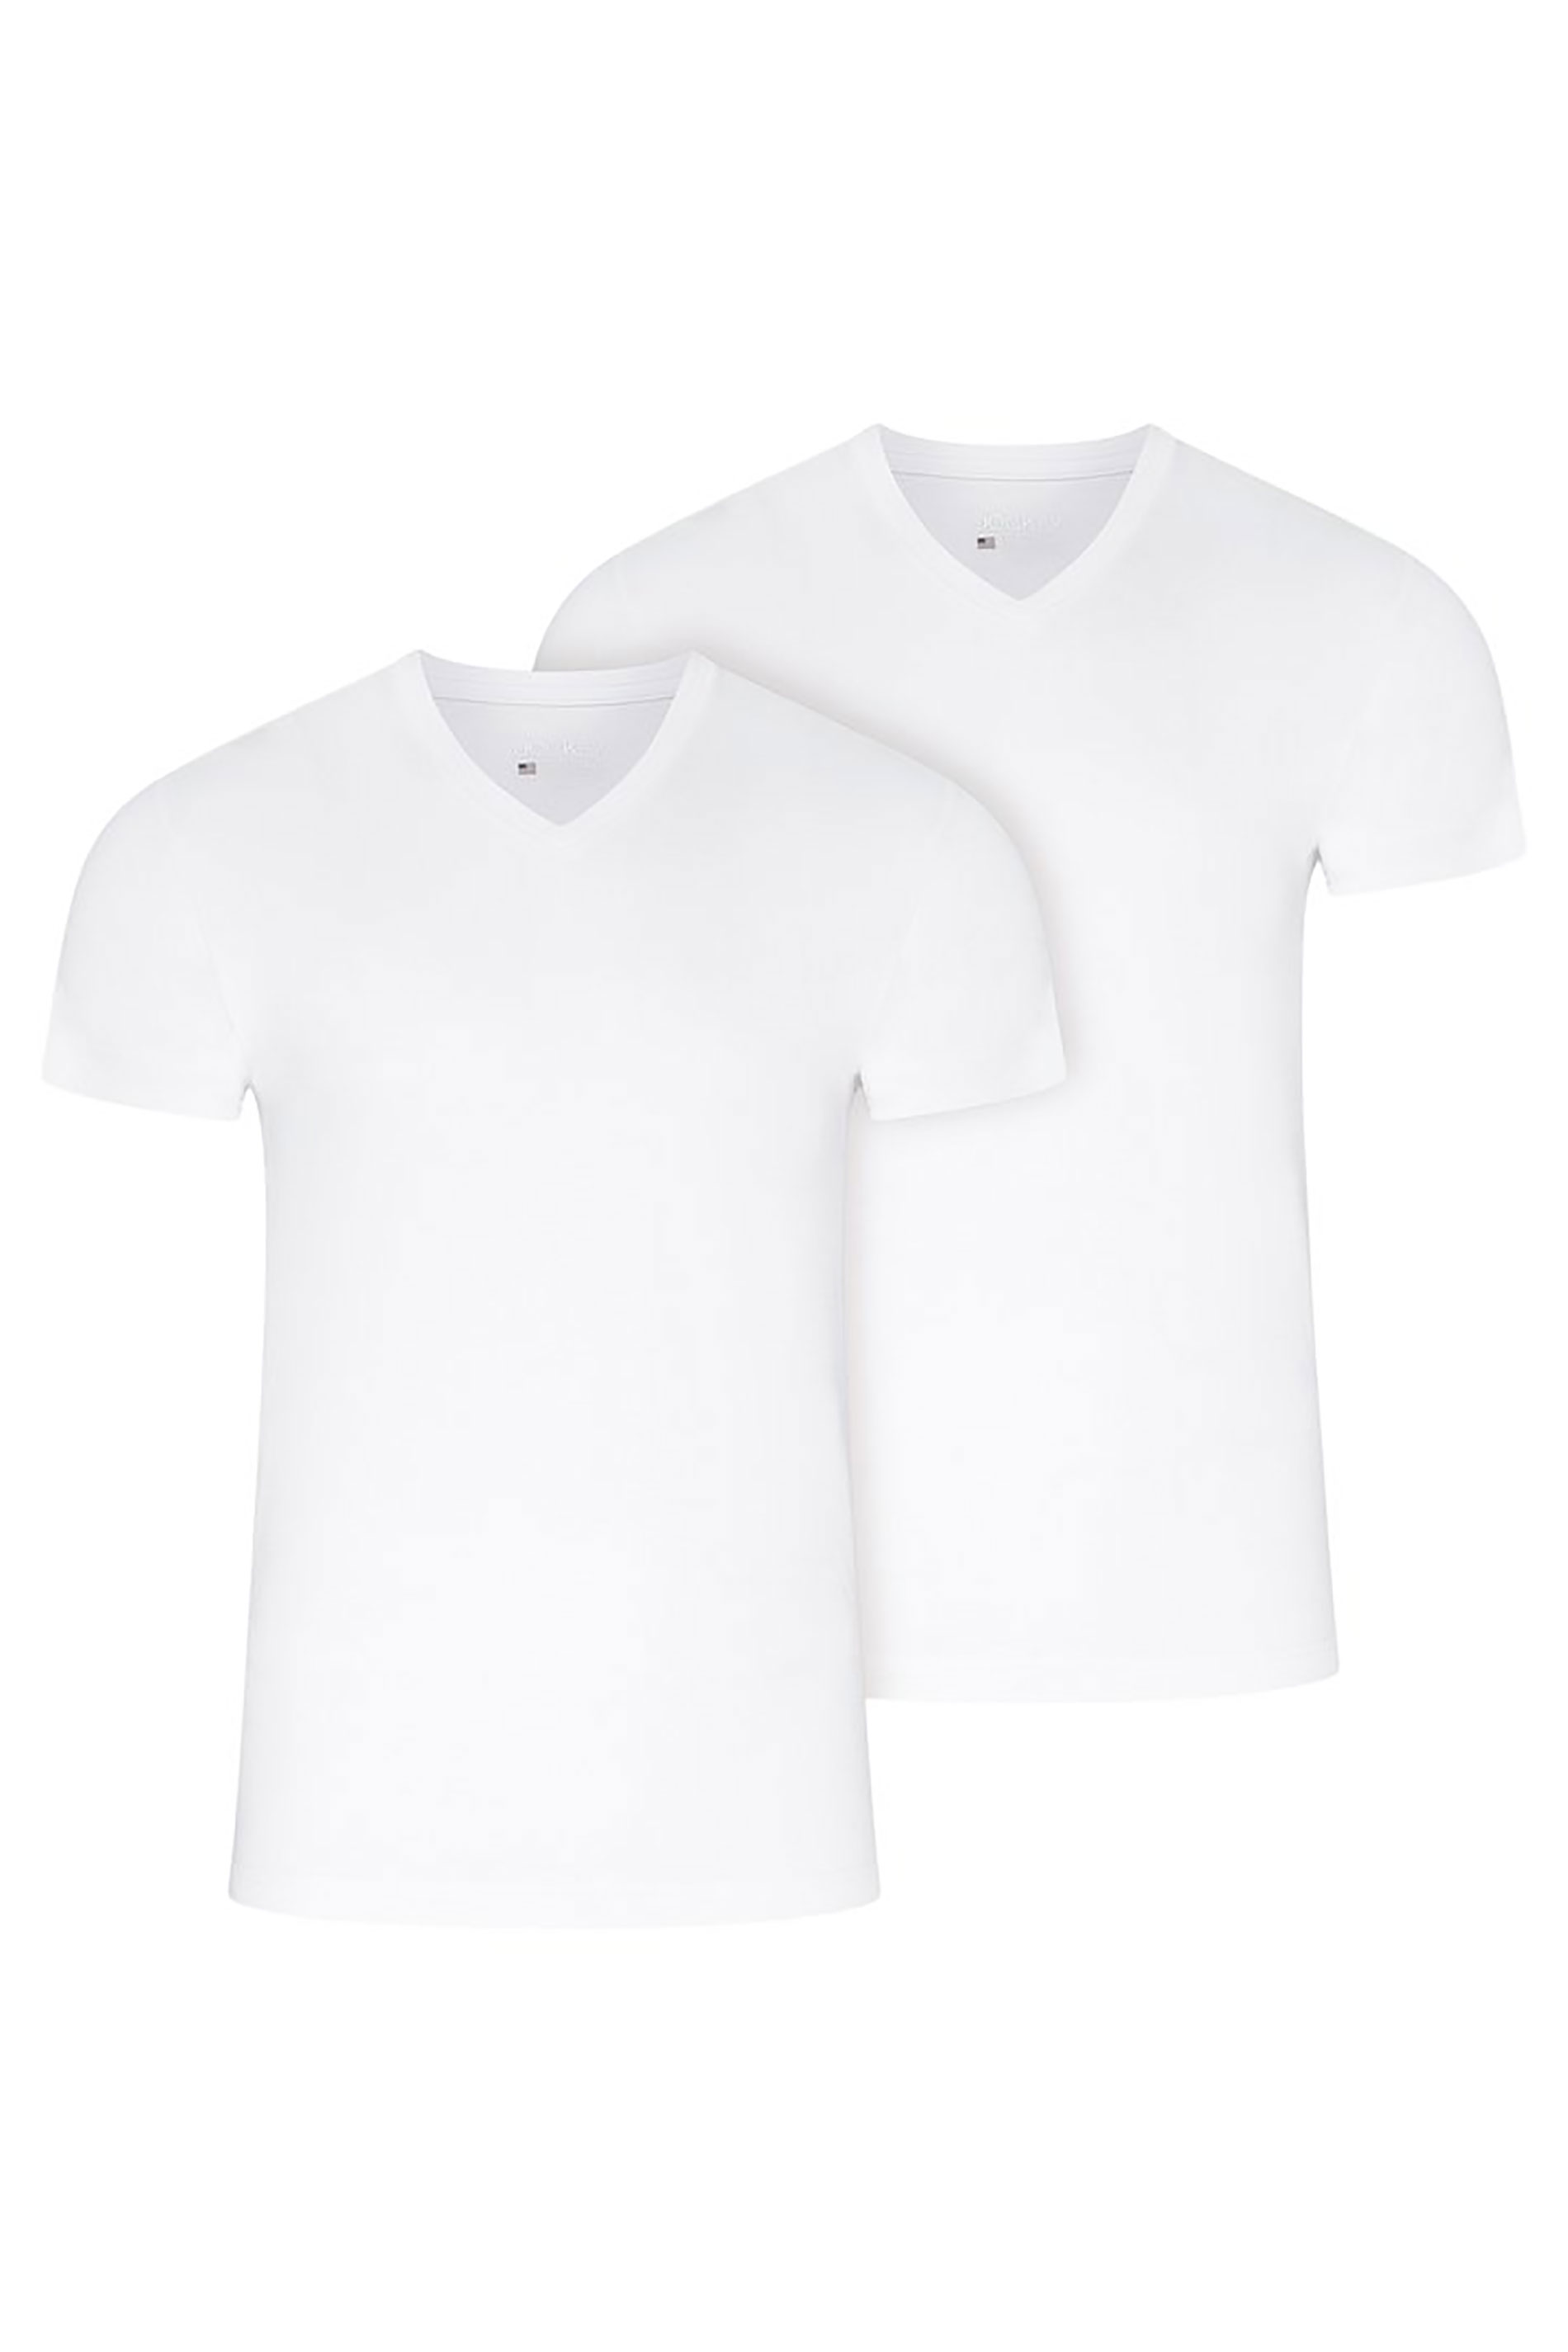 JOCKEY White T-Shirt 2 Pack_F.jpg